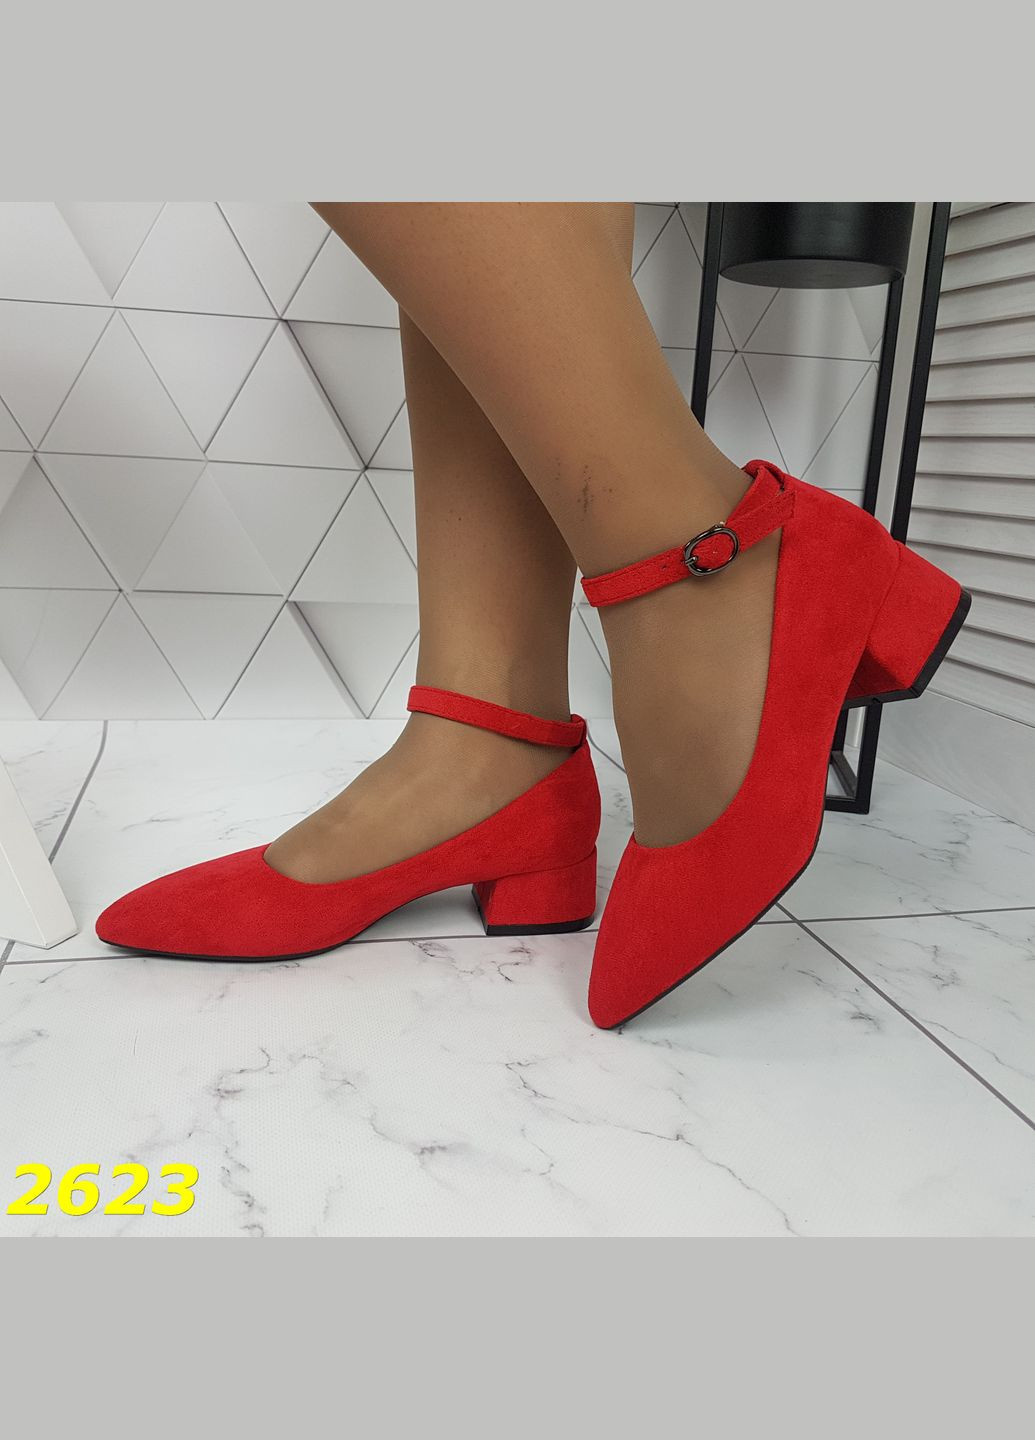 Туфли лодочки с узким носом на низком каблуке с ремешком застежкой красные (24,5 см) sp-2623 No Brand